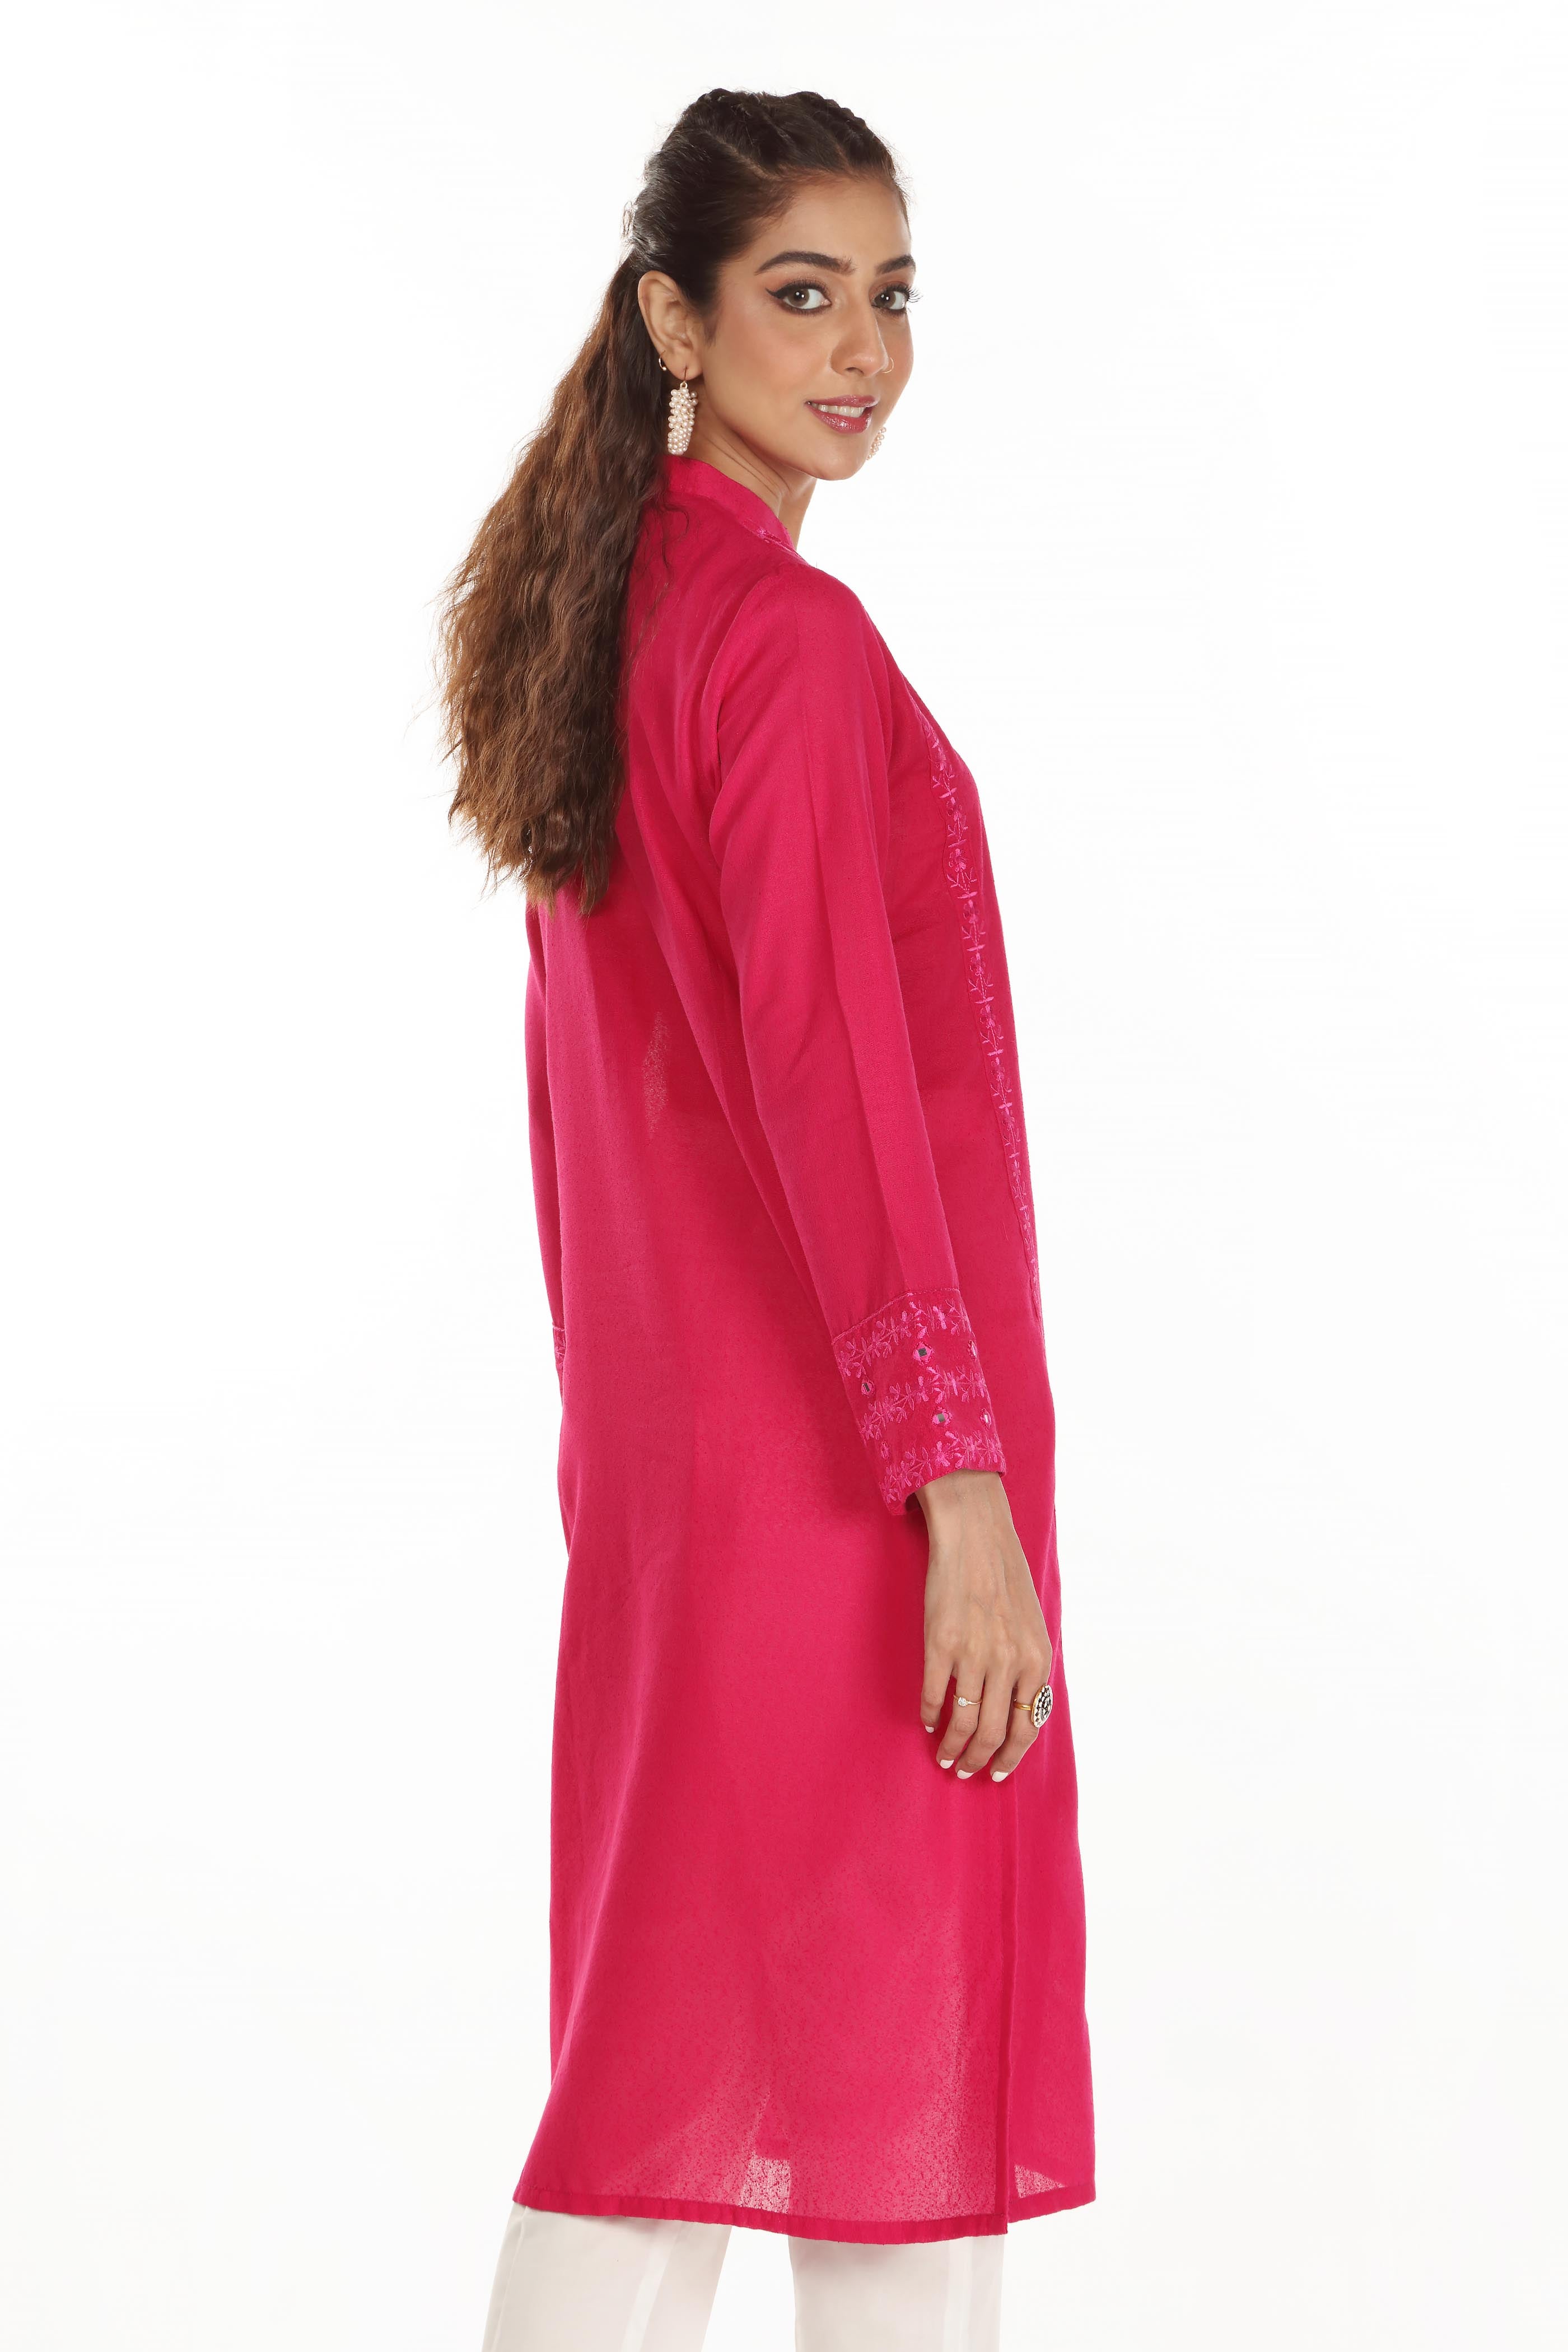 Self Paisley 2 in Pink coloured Lawn Karandi fabric 3